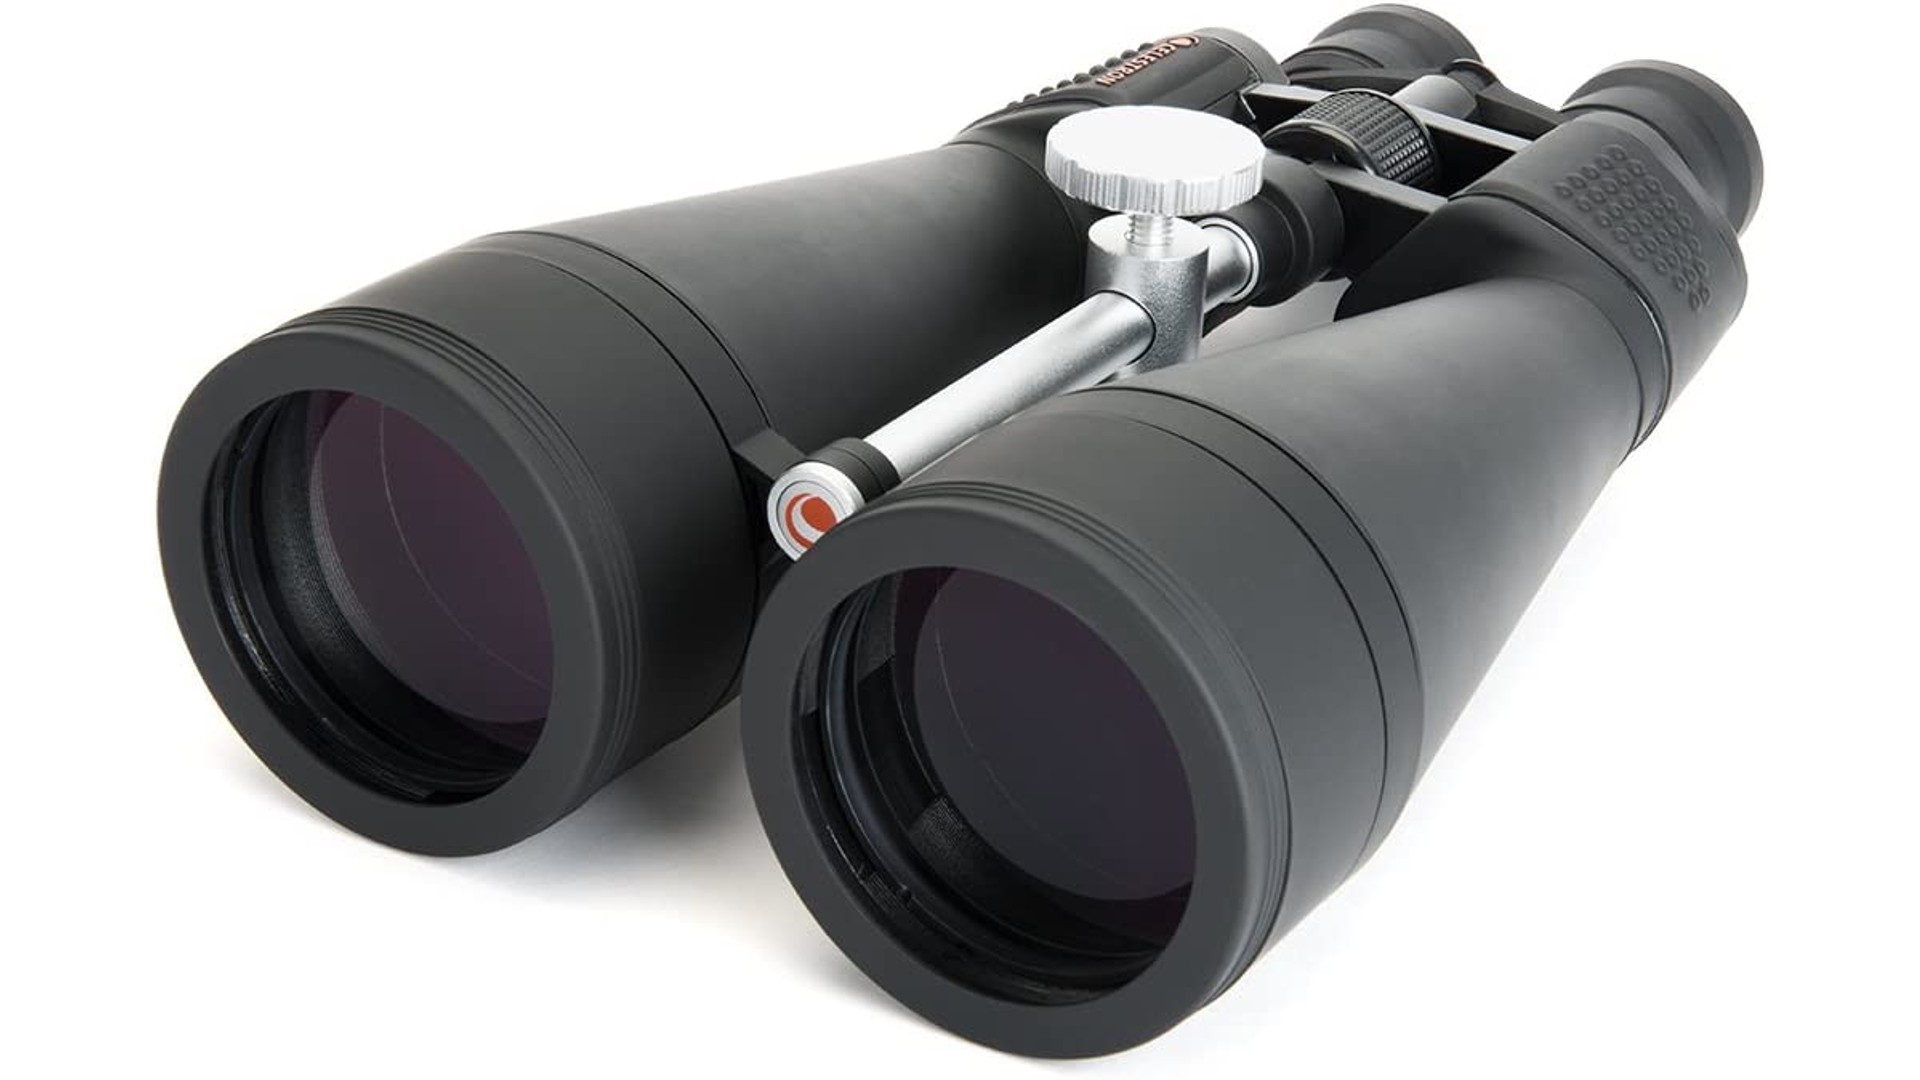 Celestron's powerful Skymaster 18-40x80 binoculars are $48 off this Black Friday